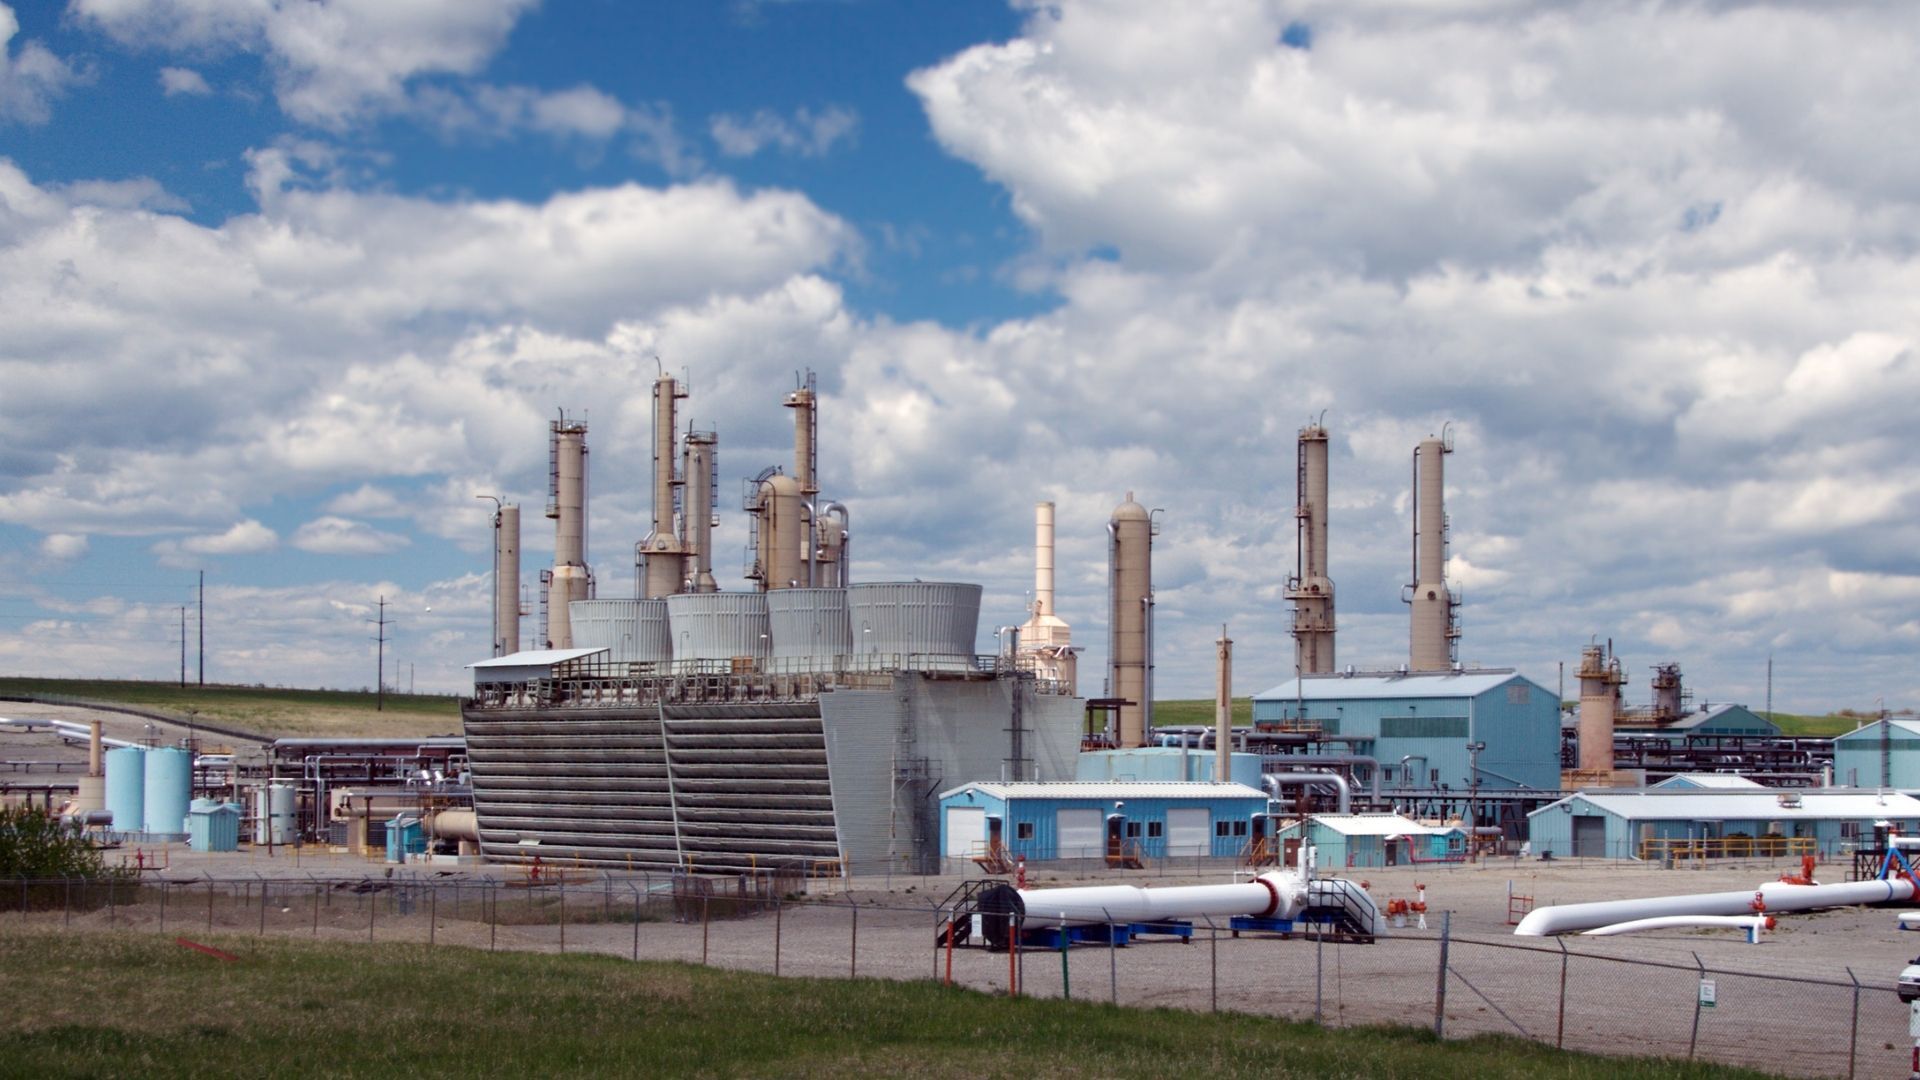 IIA Field Services gas plants